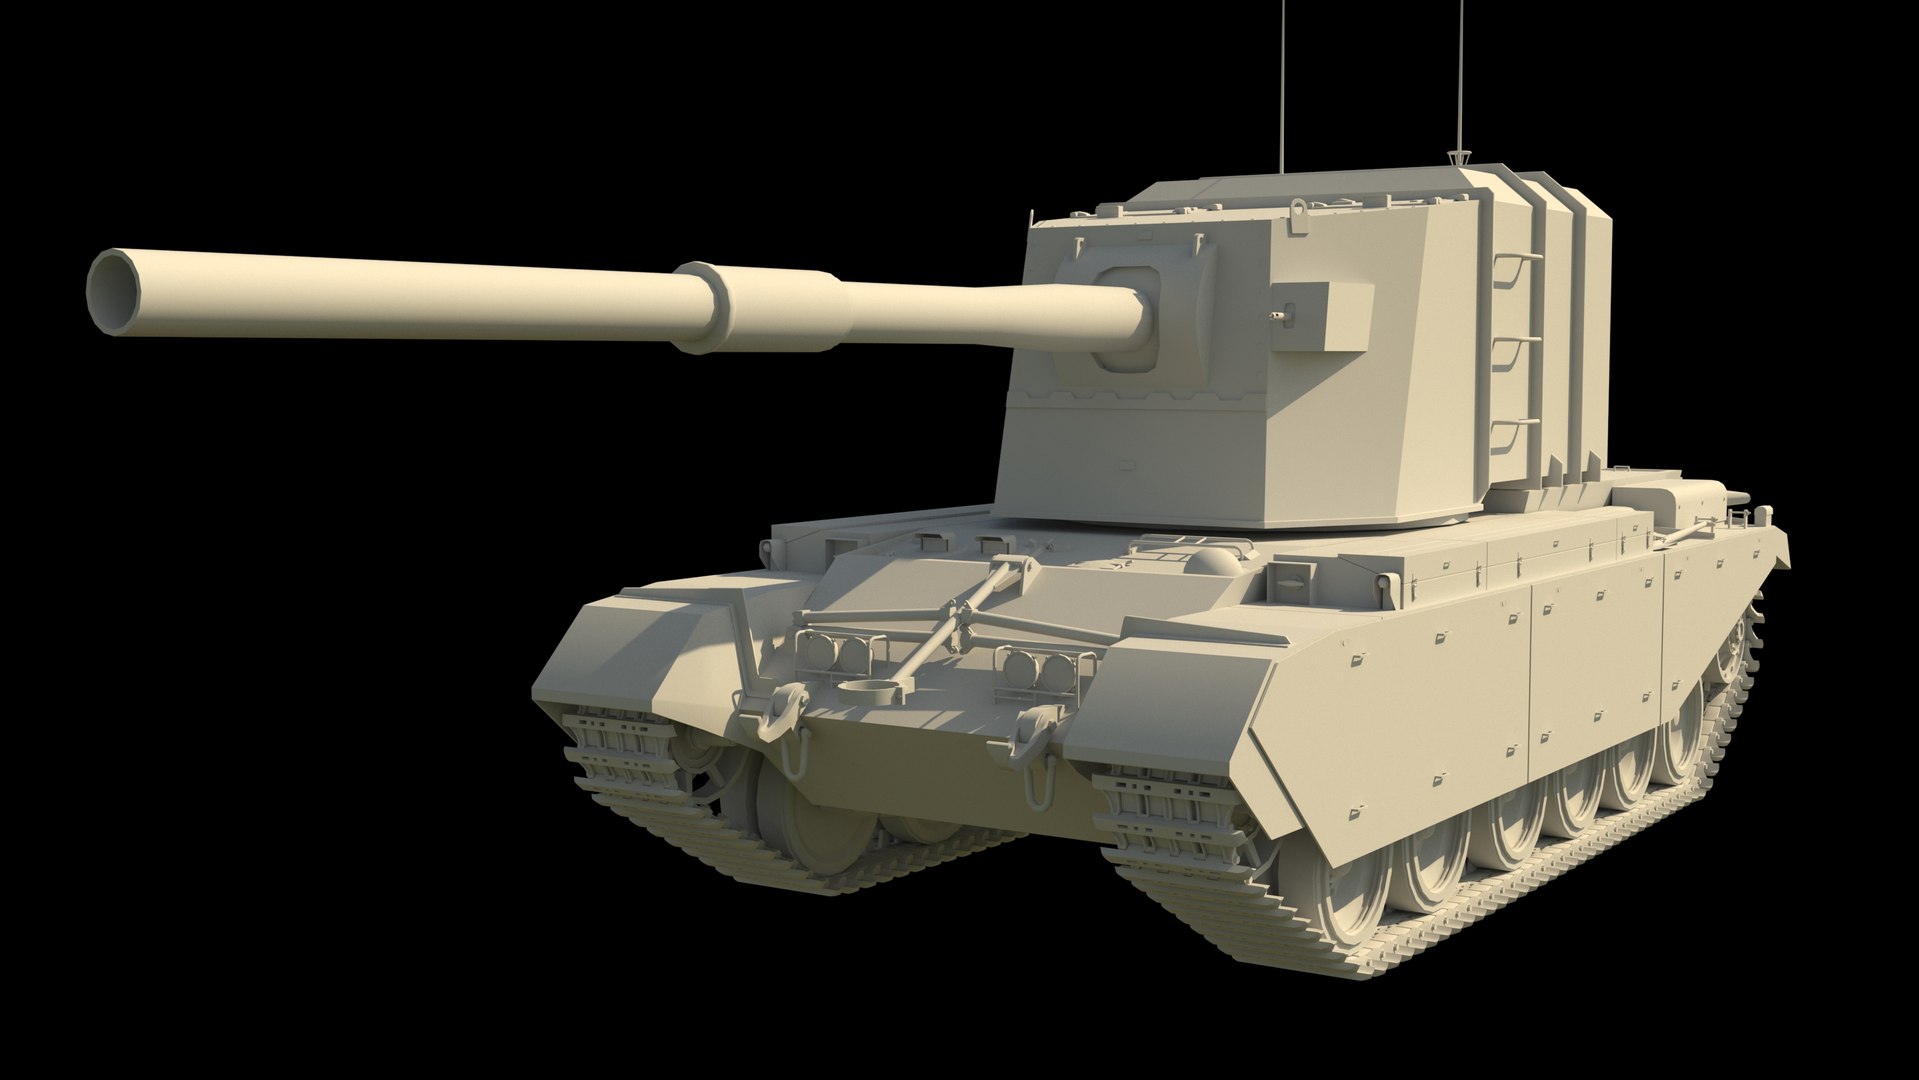 3D british heavy tank fv4005 model https://p.turbosquid.com/ts-thumb/j6/rAheFq/Bh/1/jpg/1606419797/1920x1080/fit_q87/76eaee915c454b28d8df3dd6e01c1576852cd089/1.jpg